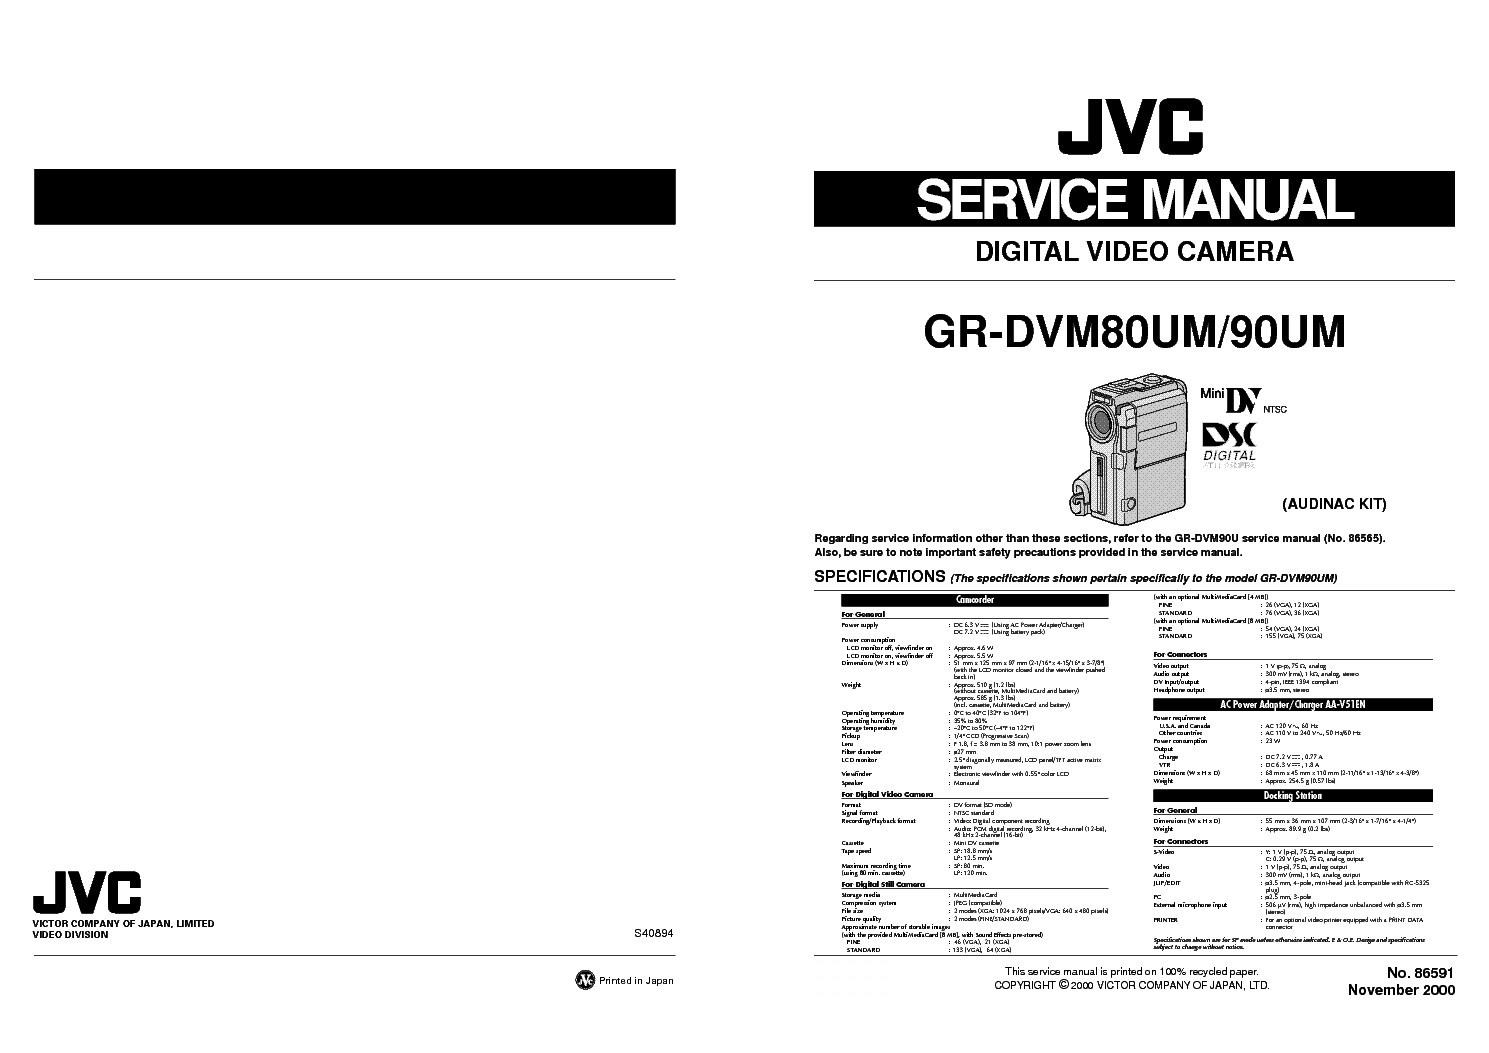 Service manual jvc. JVC Dr-e3l service manual. JVC gr-d340e устройство в режиме защиты. JVC gr PD 1 инструкция. MTV-54g10hp сервис мануал.